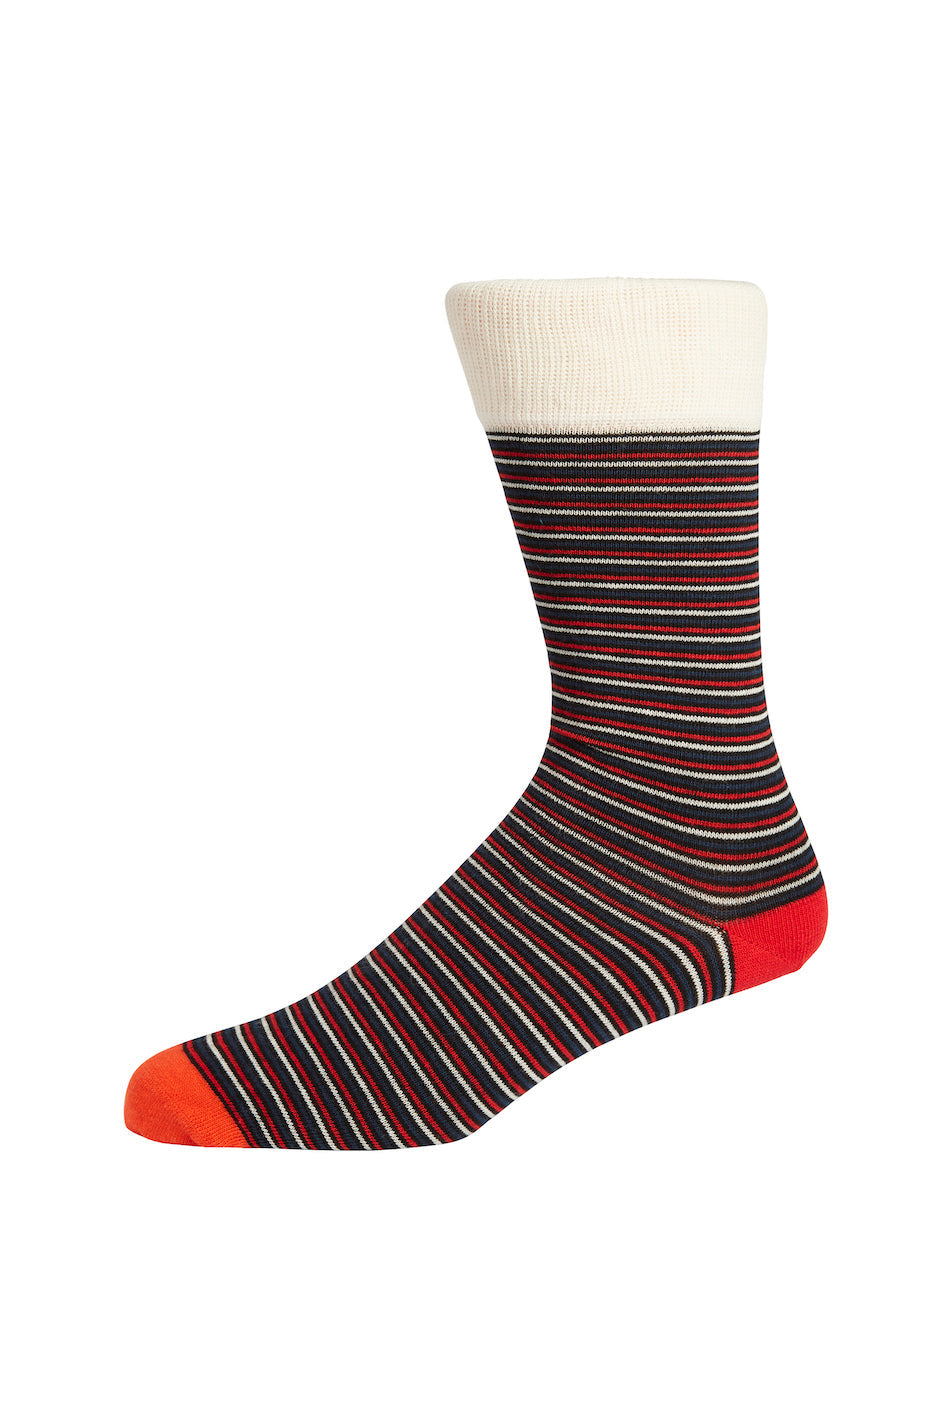 Democratique 2 Pack Men's Ultralight Stripe Sock